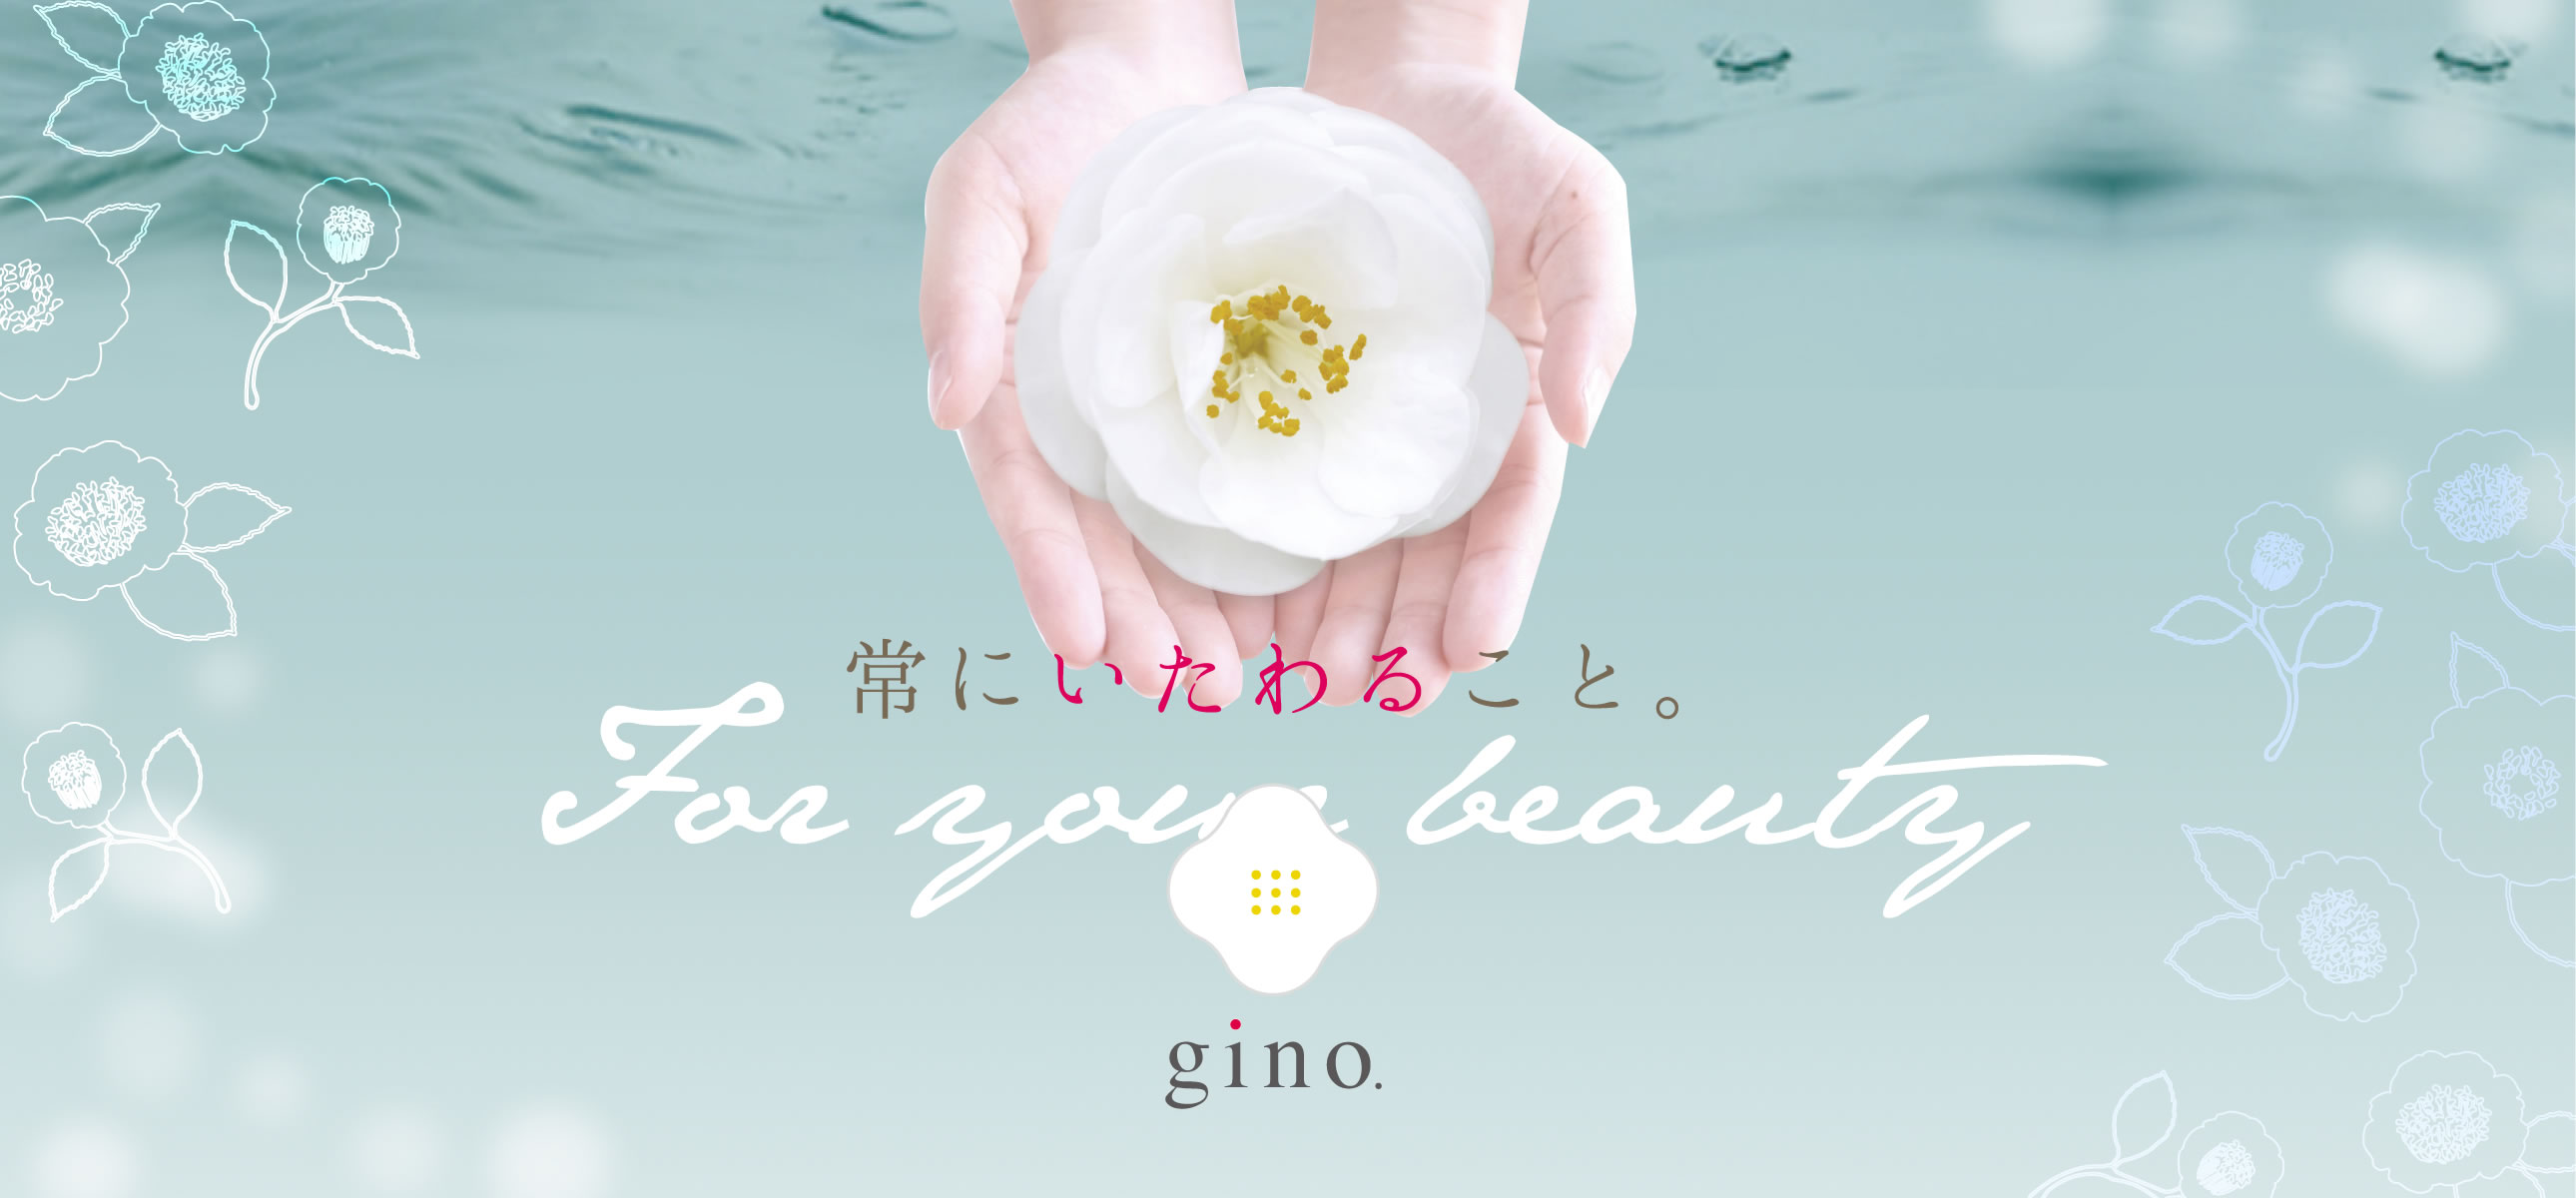 gino ジーノ 常にいたわること for your beauty